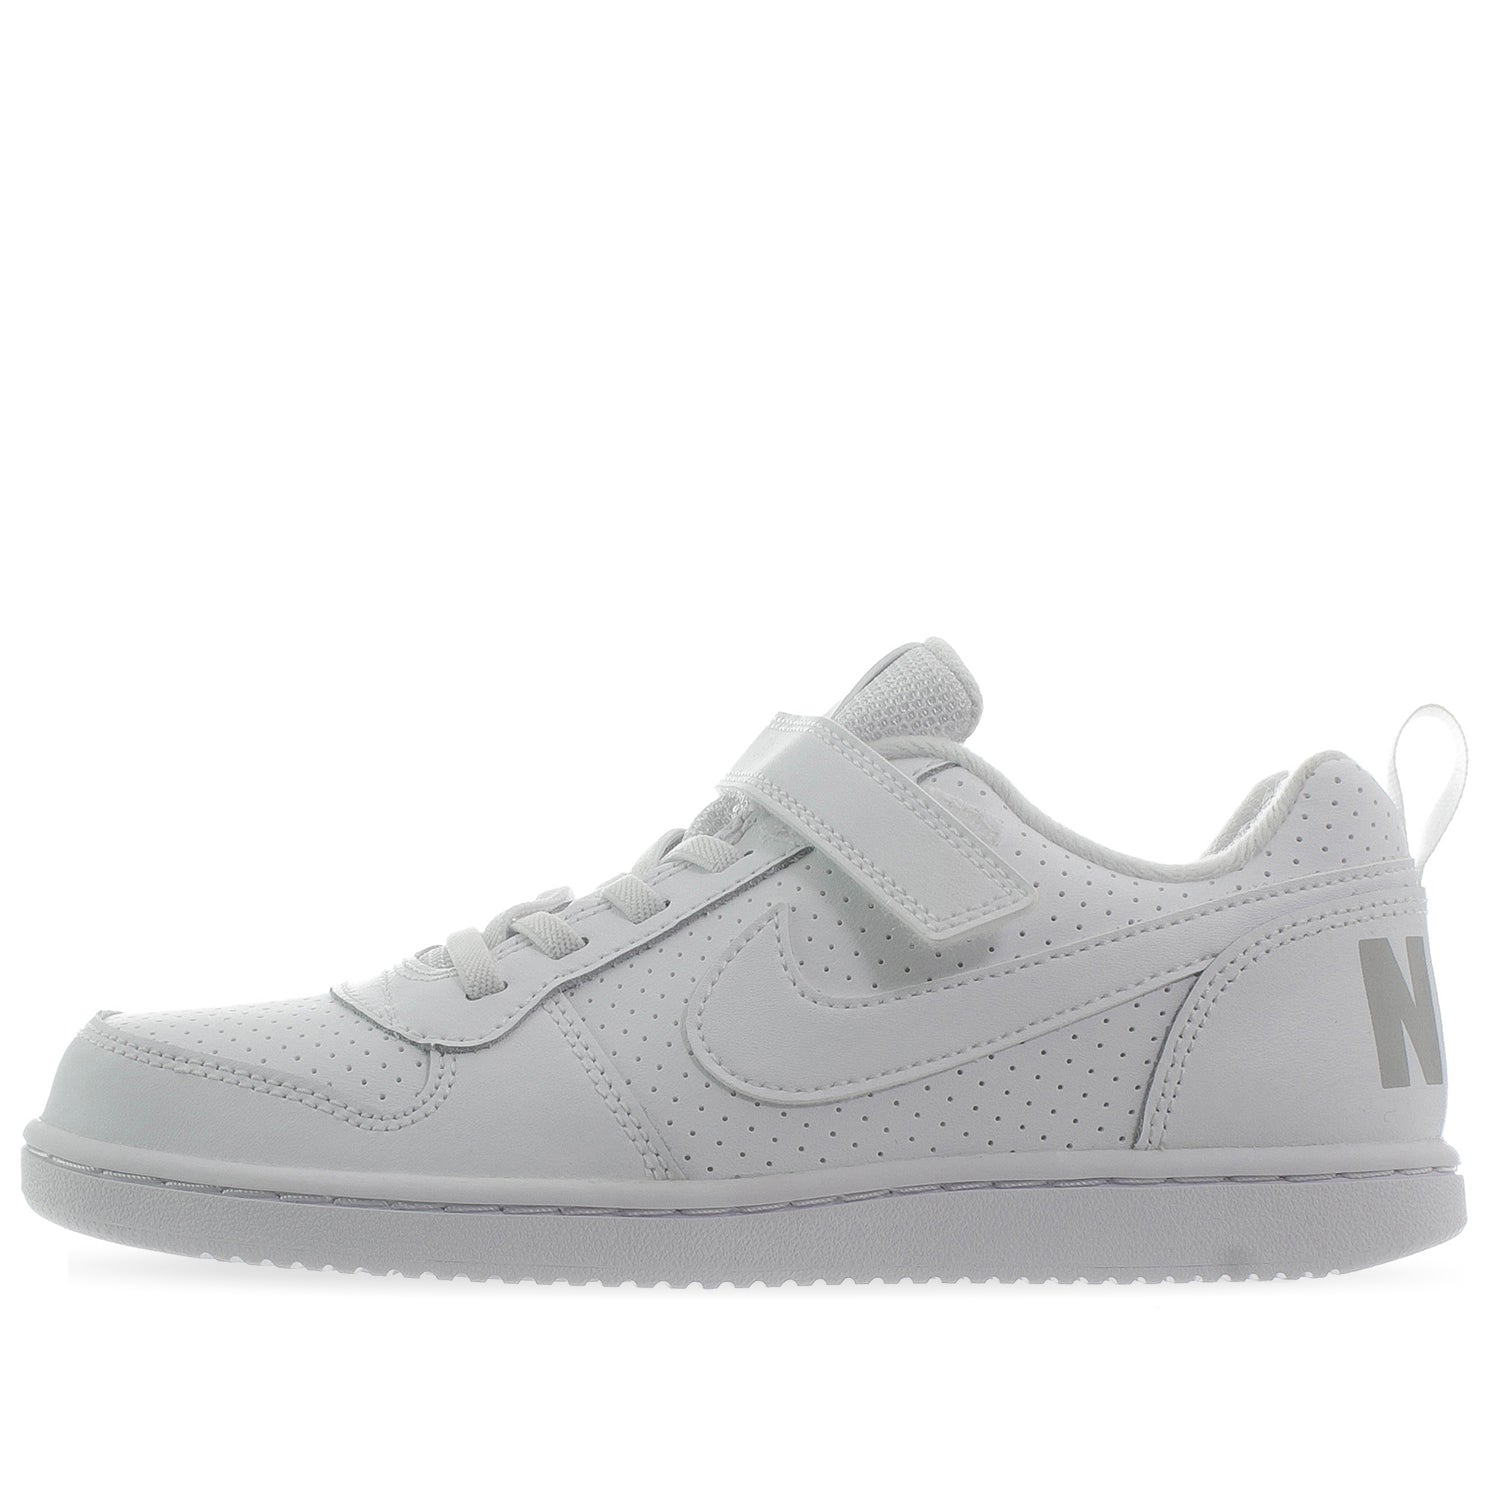 Tenis Nike Court Borough Low PS - 870025100 - Blanco - Niños |  Shoelander.com - Footwear Retail